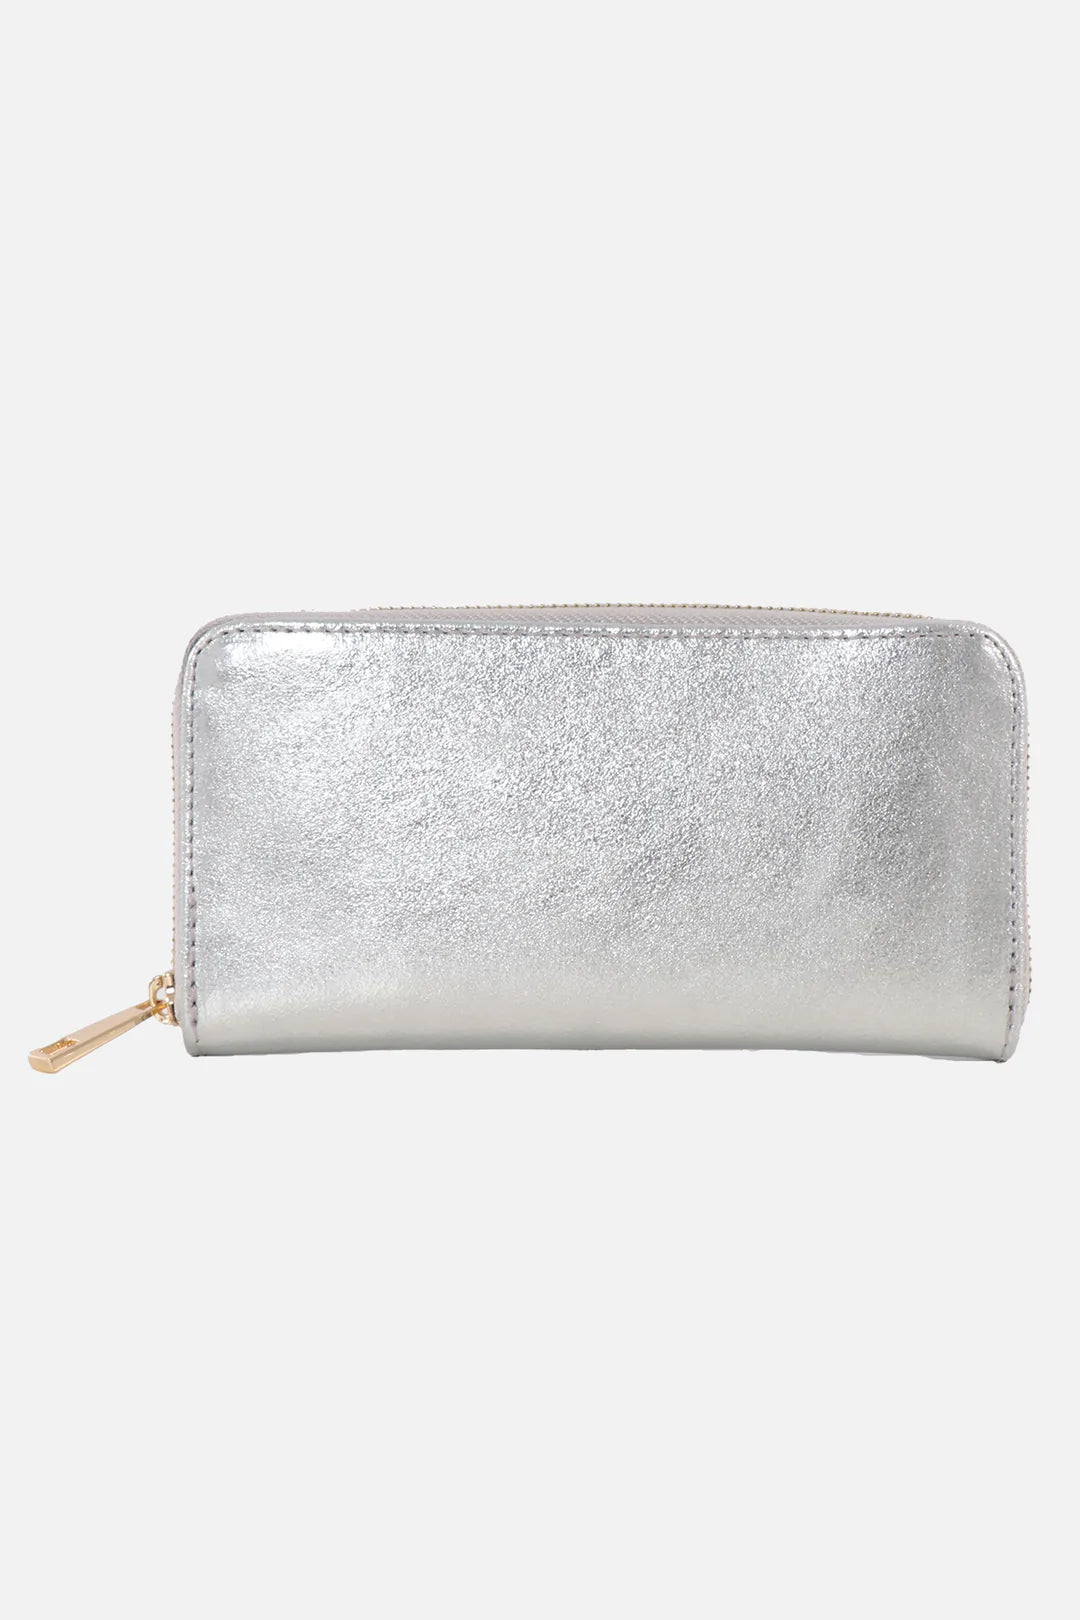 Silver leather purse